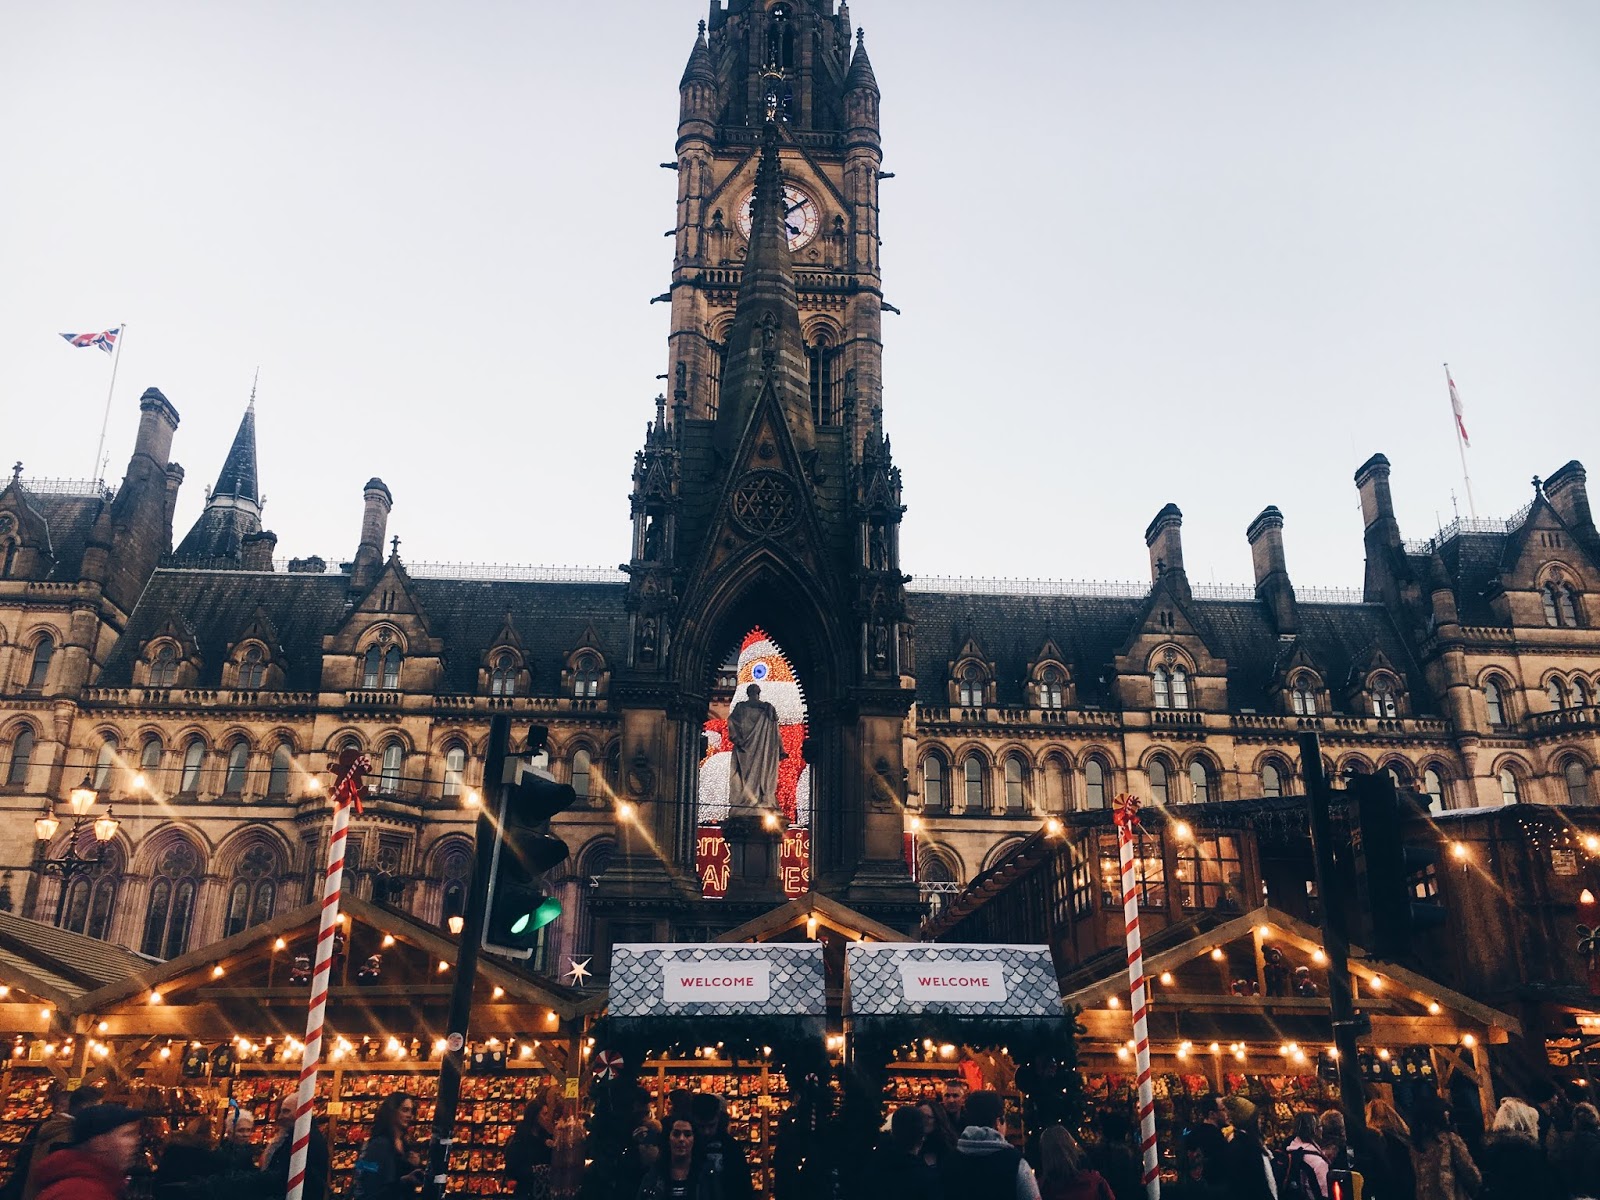 Manchester Christmas Markets - Manchester - Visit Manchester